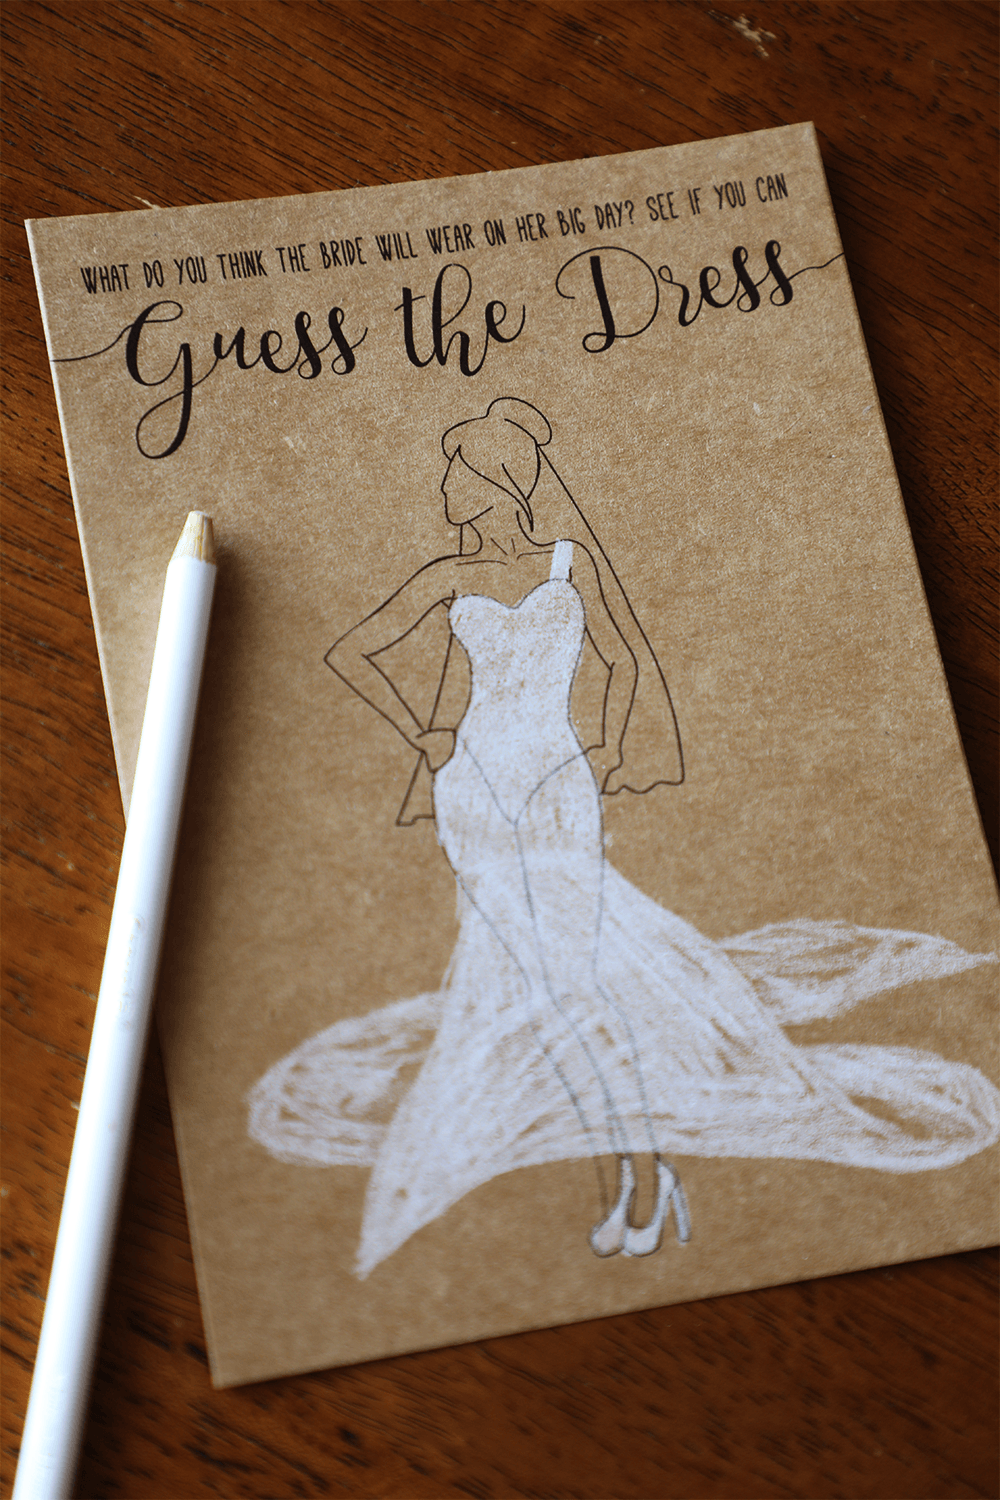 14 dress Wedding drawing ideas